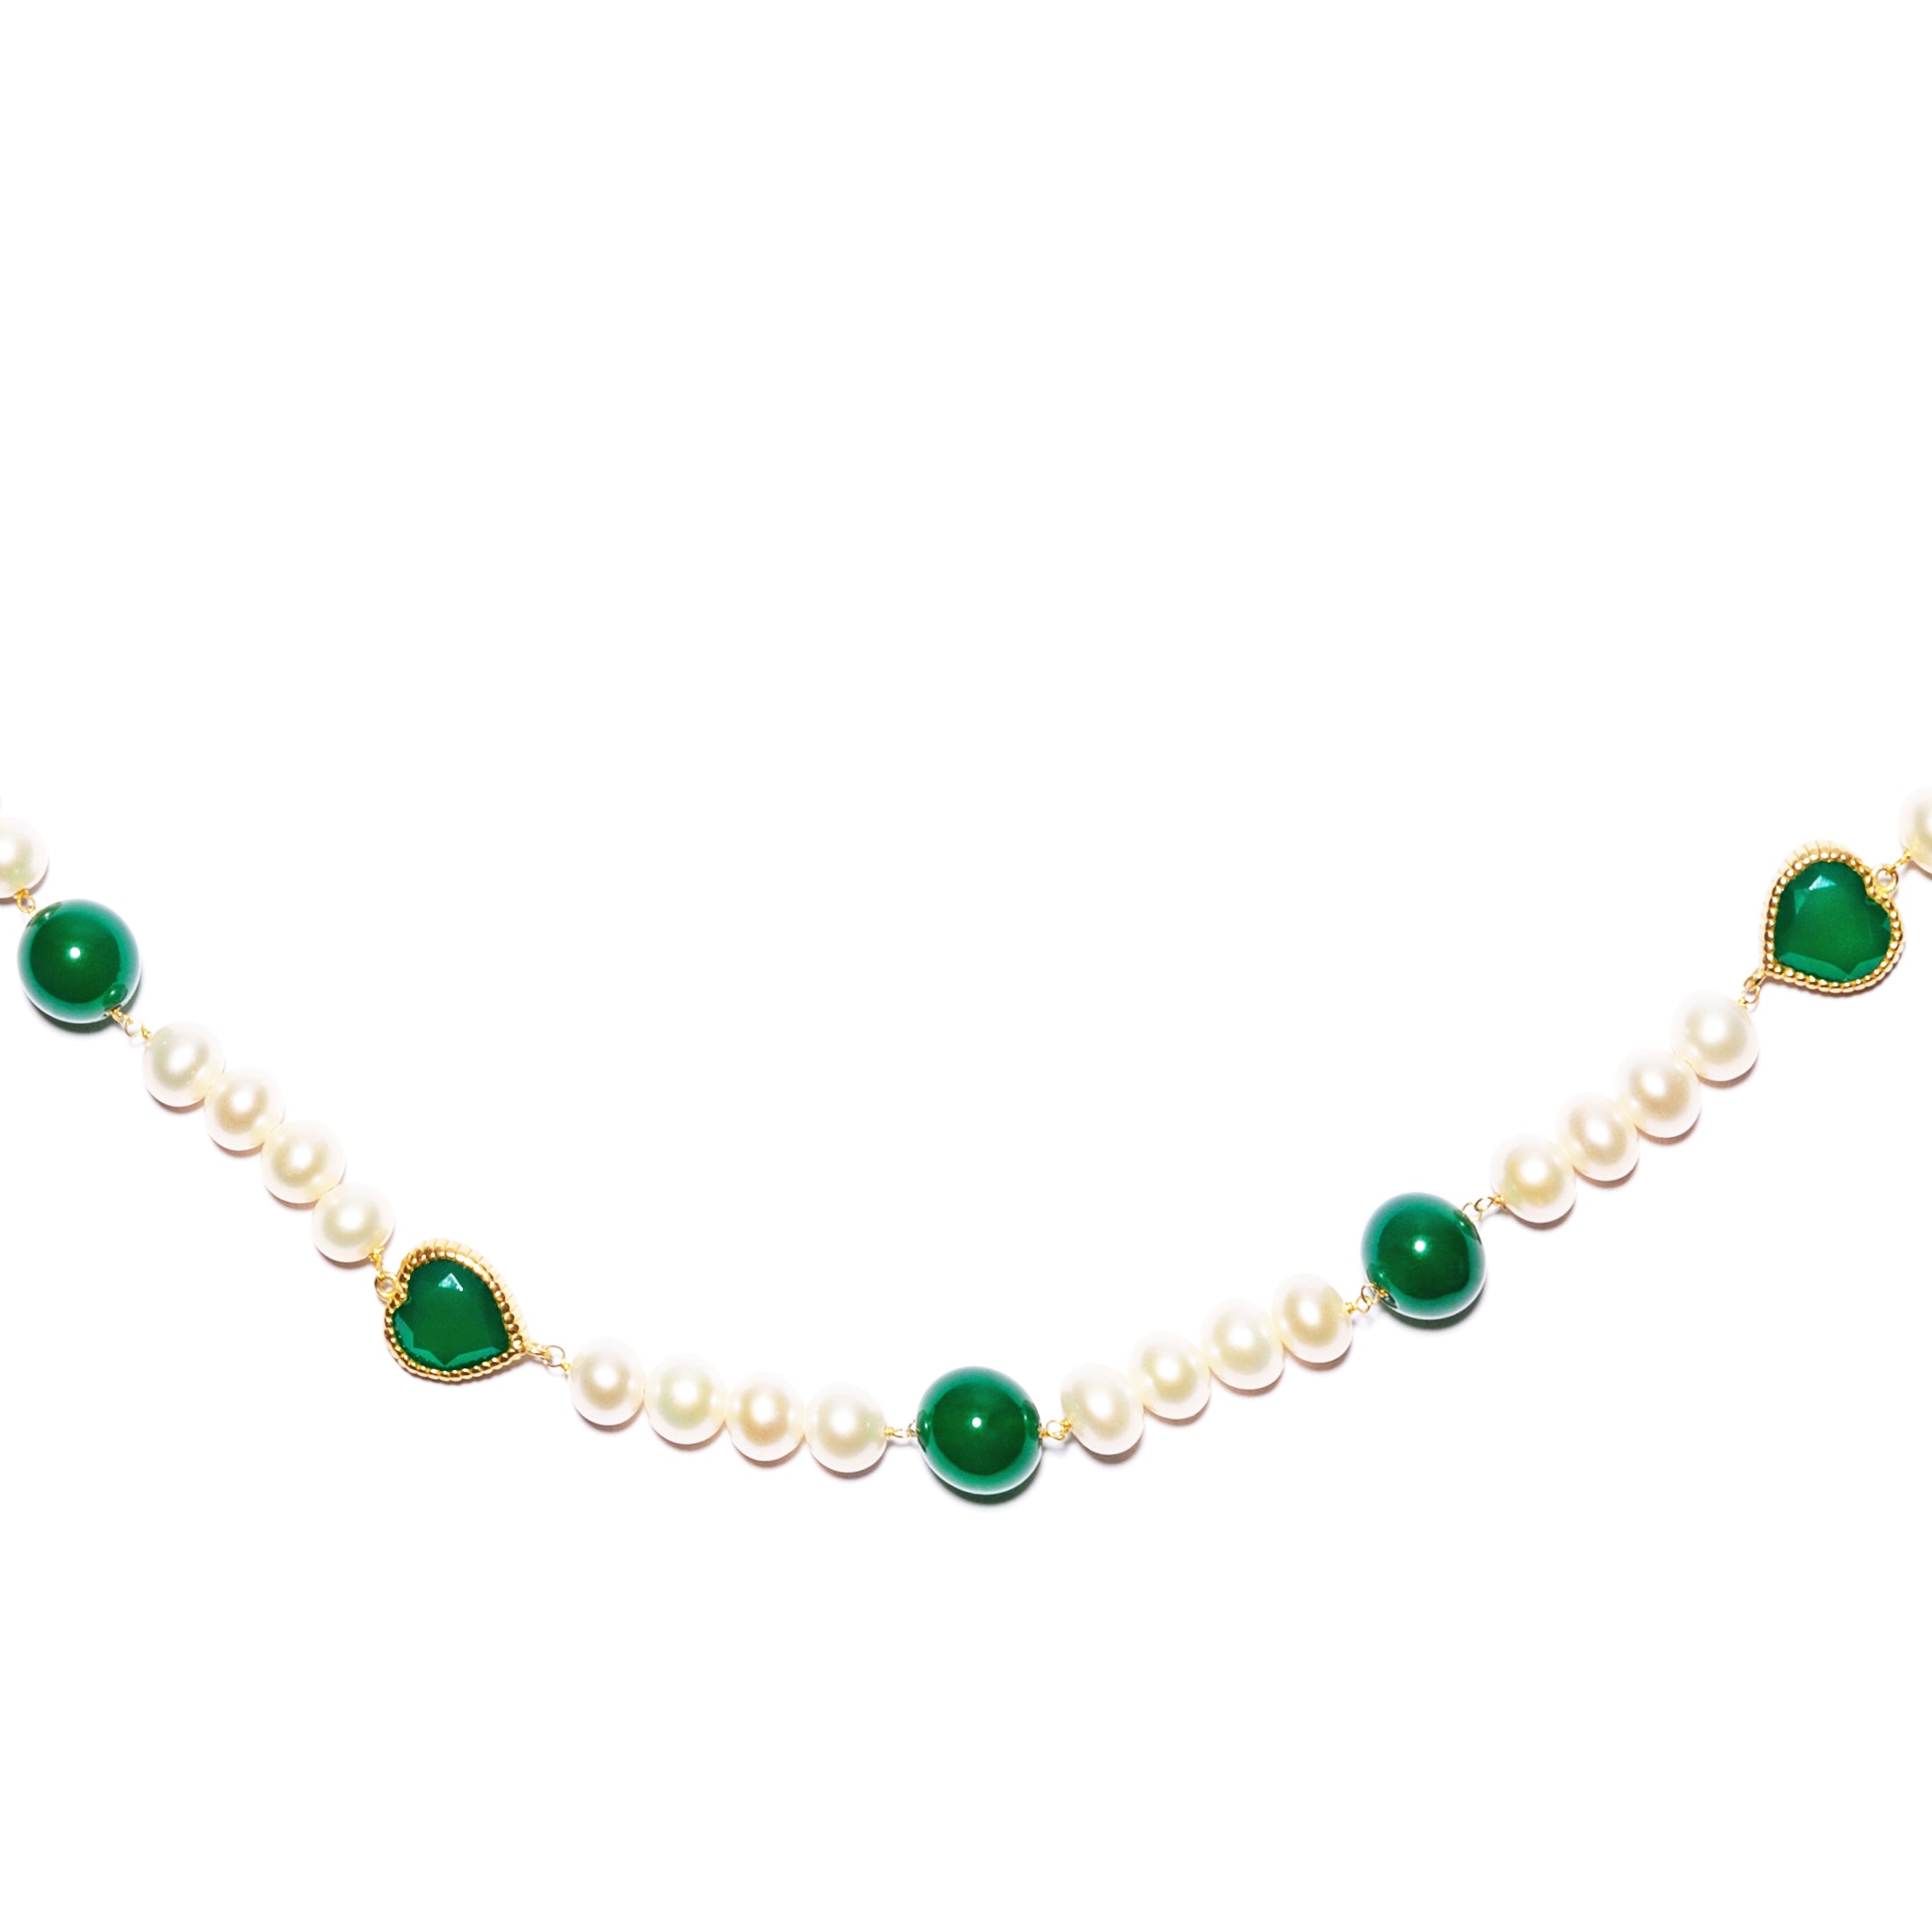 Buy Men's emerald PEARL & Onyx Necklace Men's Swarovski Emerald Green Pearl  Matte Black Onyx Gemstone Necklace Men's Pearl Necklace Online in India -  Etsy